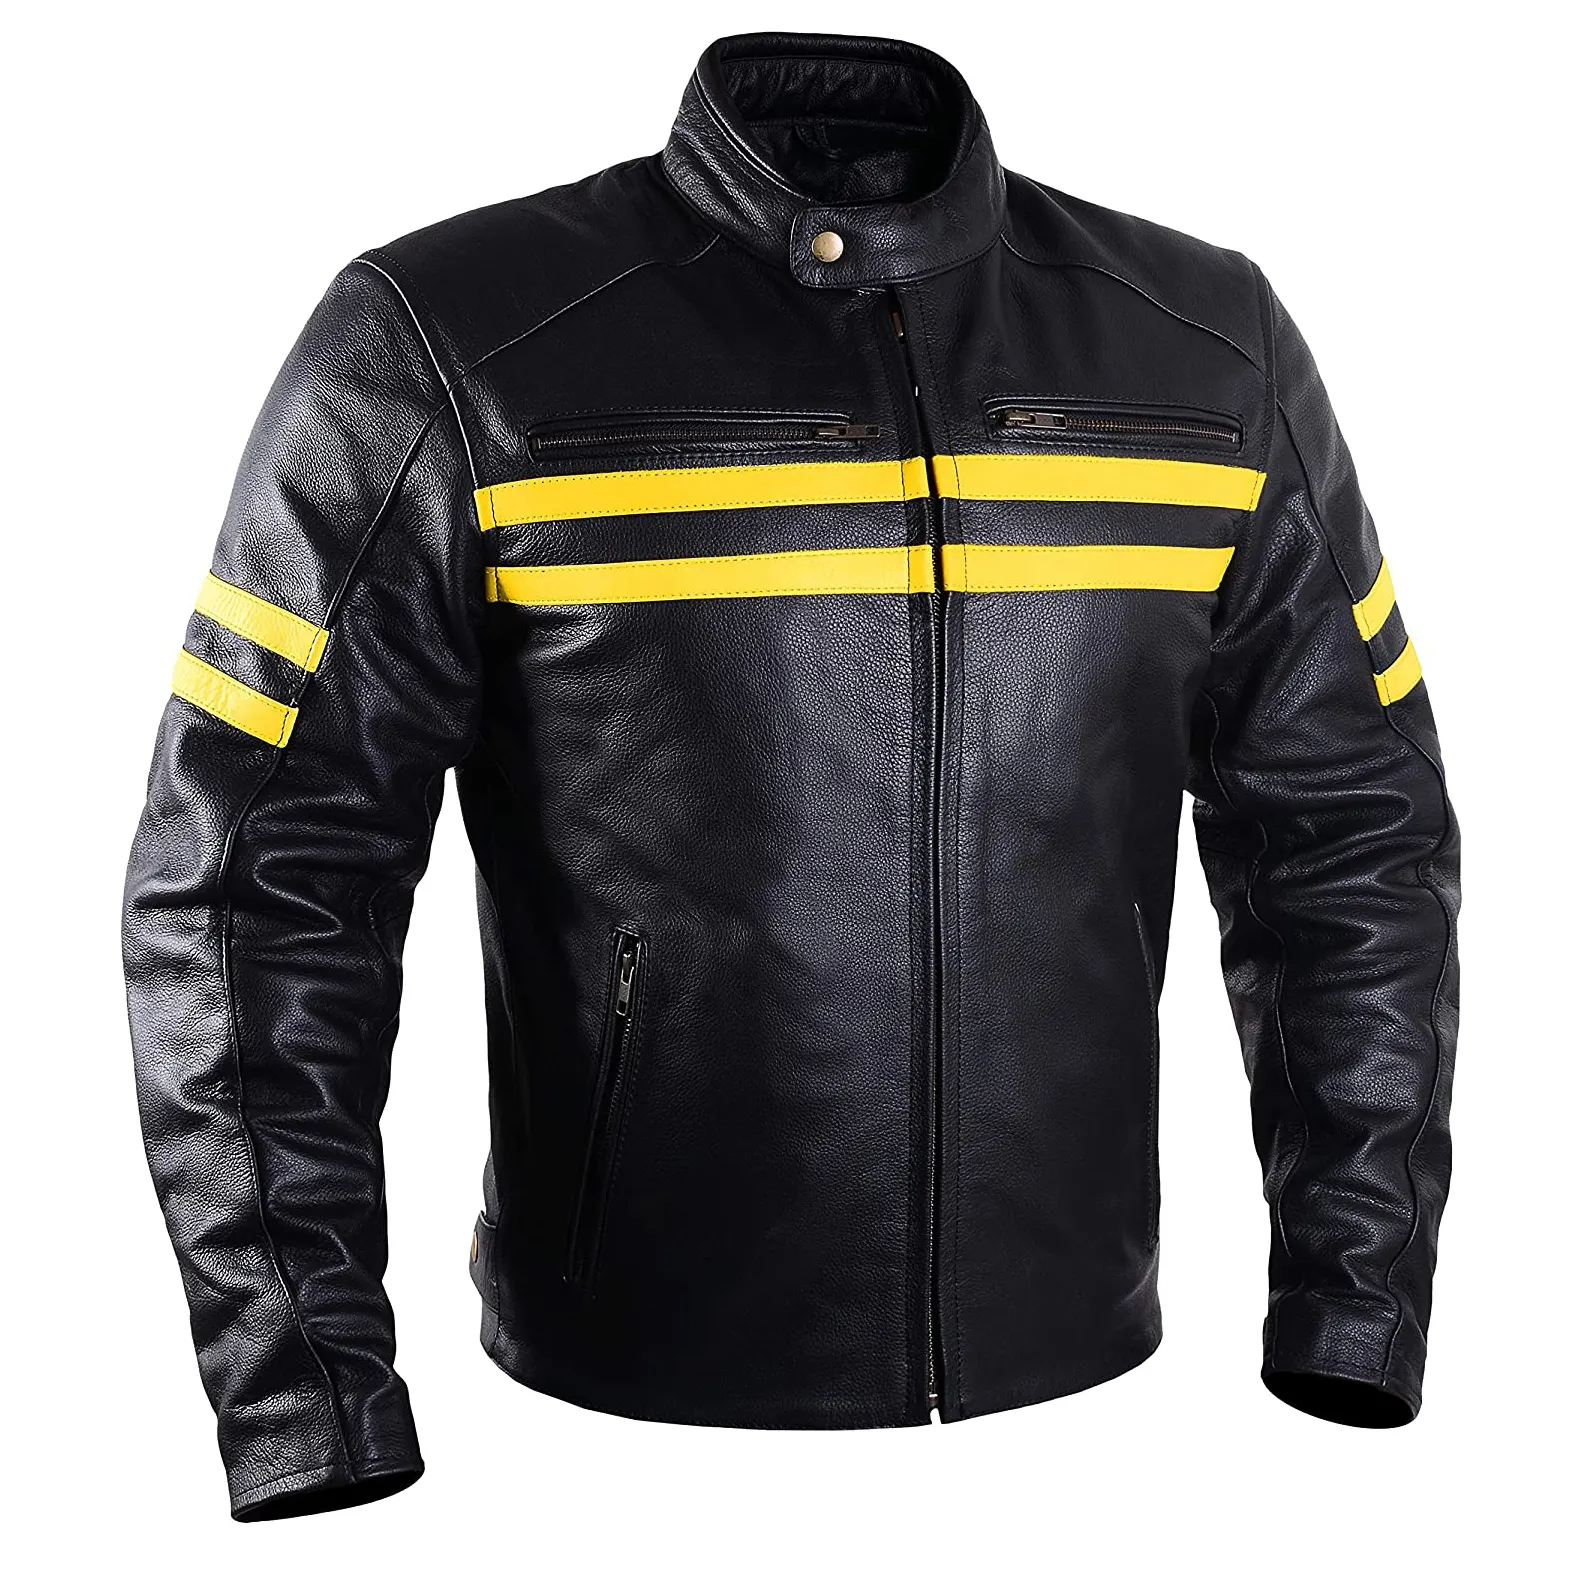 New fashion Motorbike gear biker Jackets with Protection customized Motor bike racing jackets